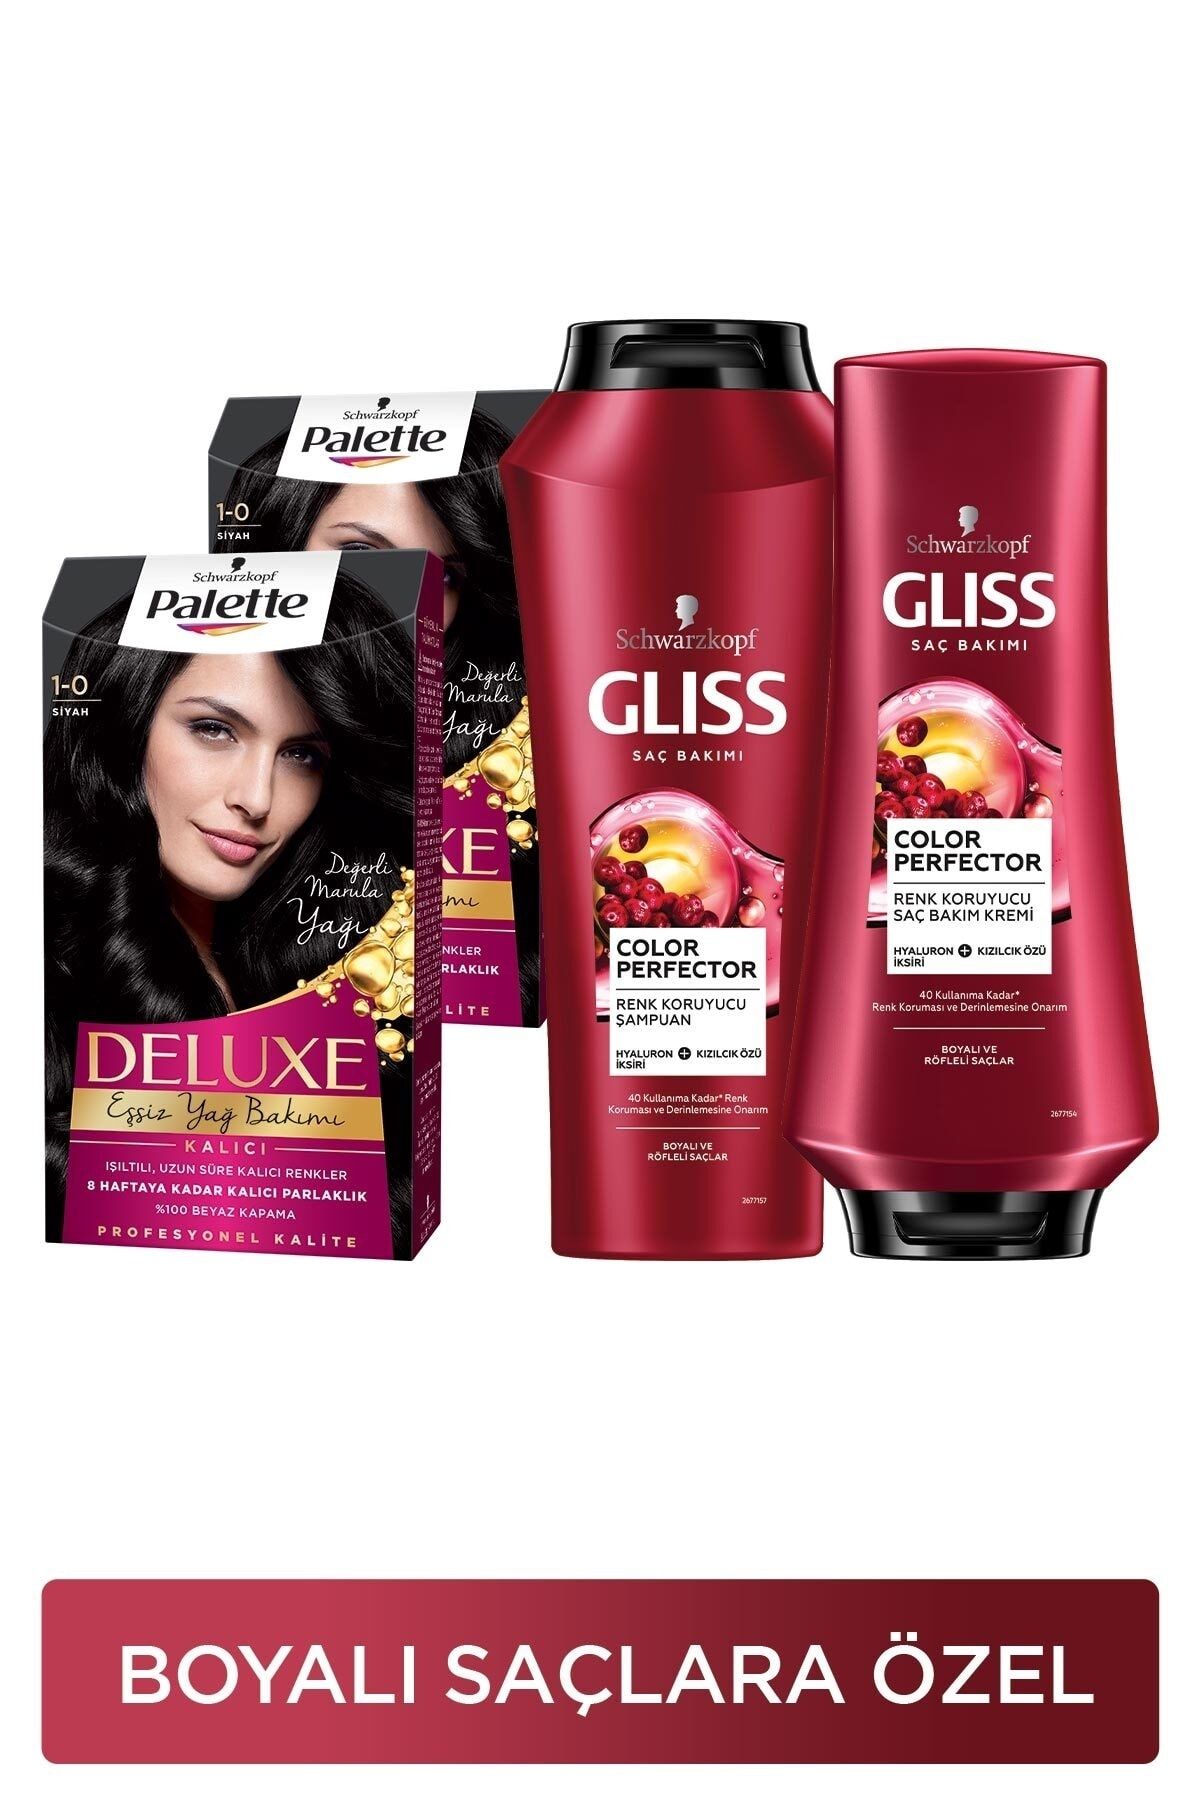 Gliss Palette Deluxe 1-0 Siyah x 2 Adet + Color Perfector Renk Koruyucu Şampuan 500 Ml + Saç Kremi 3